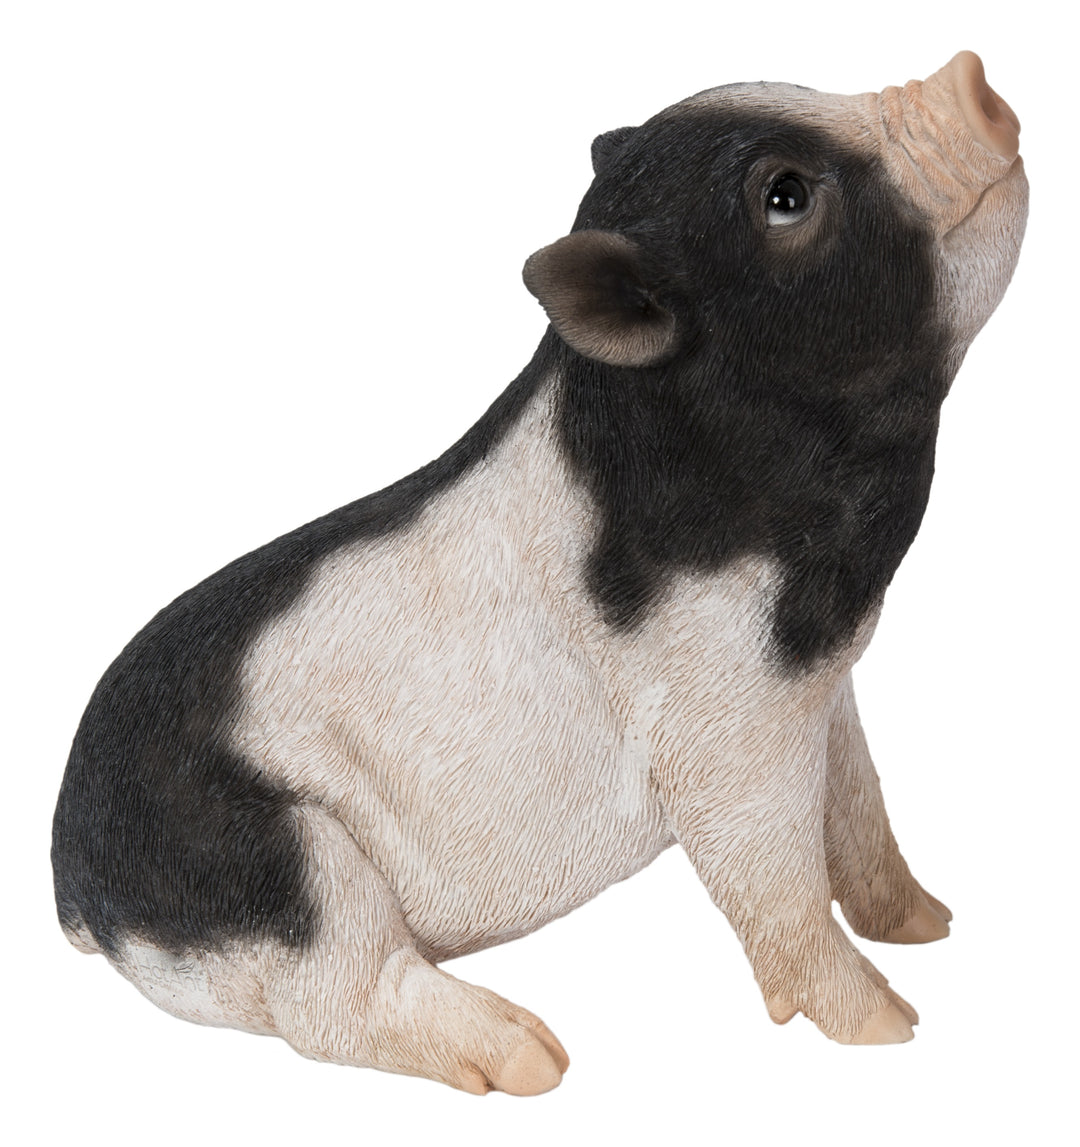 Baby Pig Sitting - Black And White HI-LINE GIFT LTD.